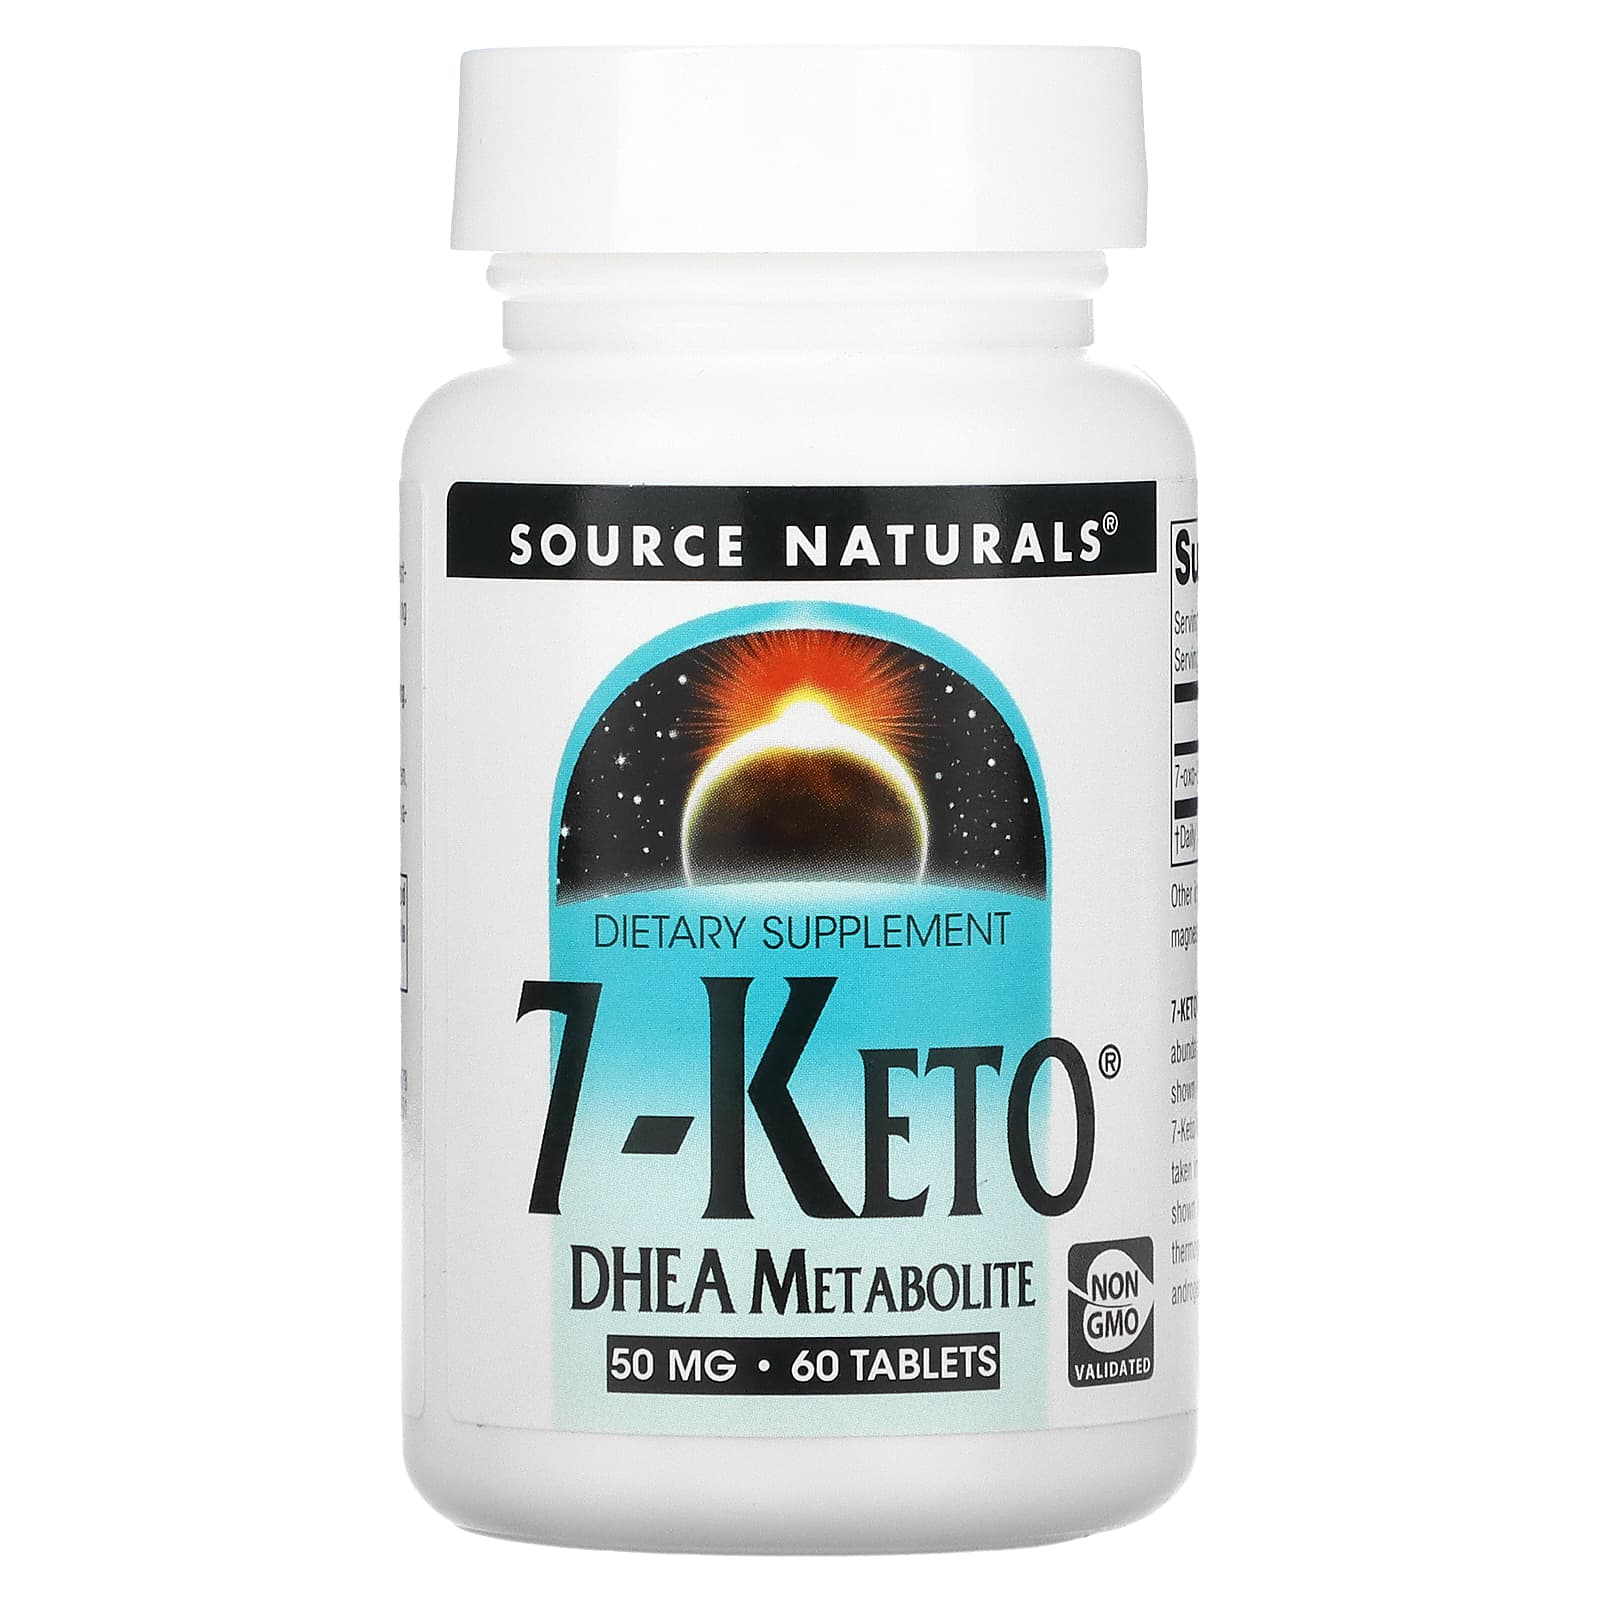 Source Naturals 7-Кето ДГЭА метаболит 50 мг 60 таблеток sundown naturals дгэа 50 мг 60 таблеток